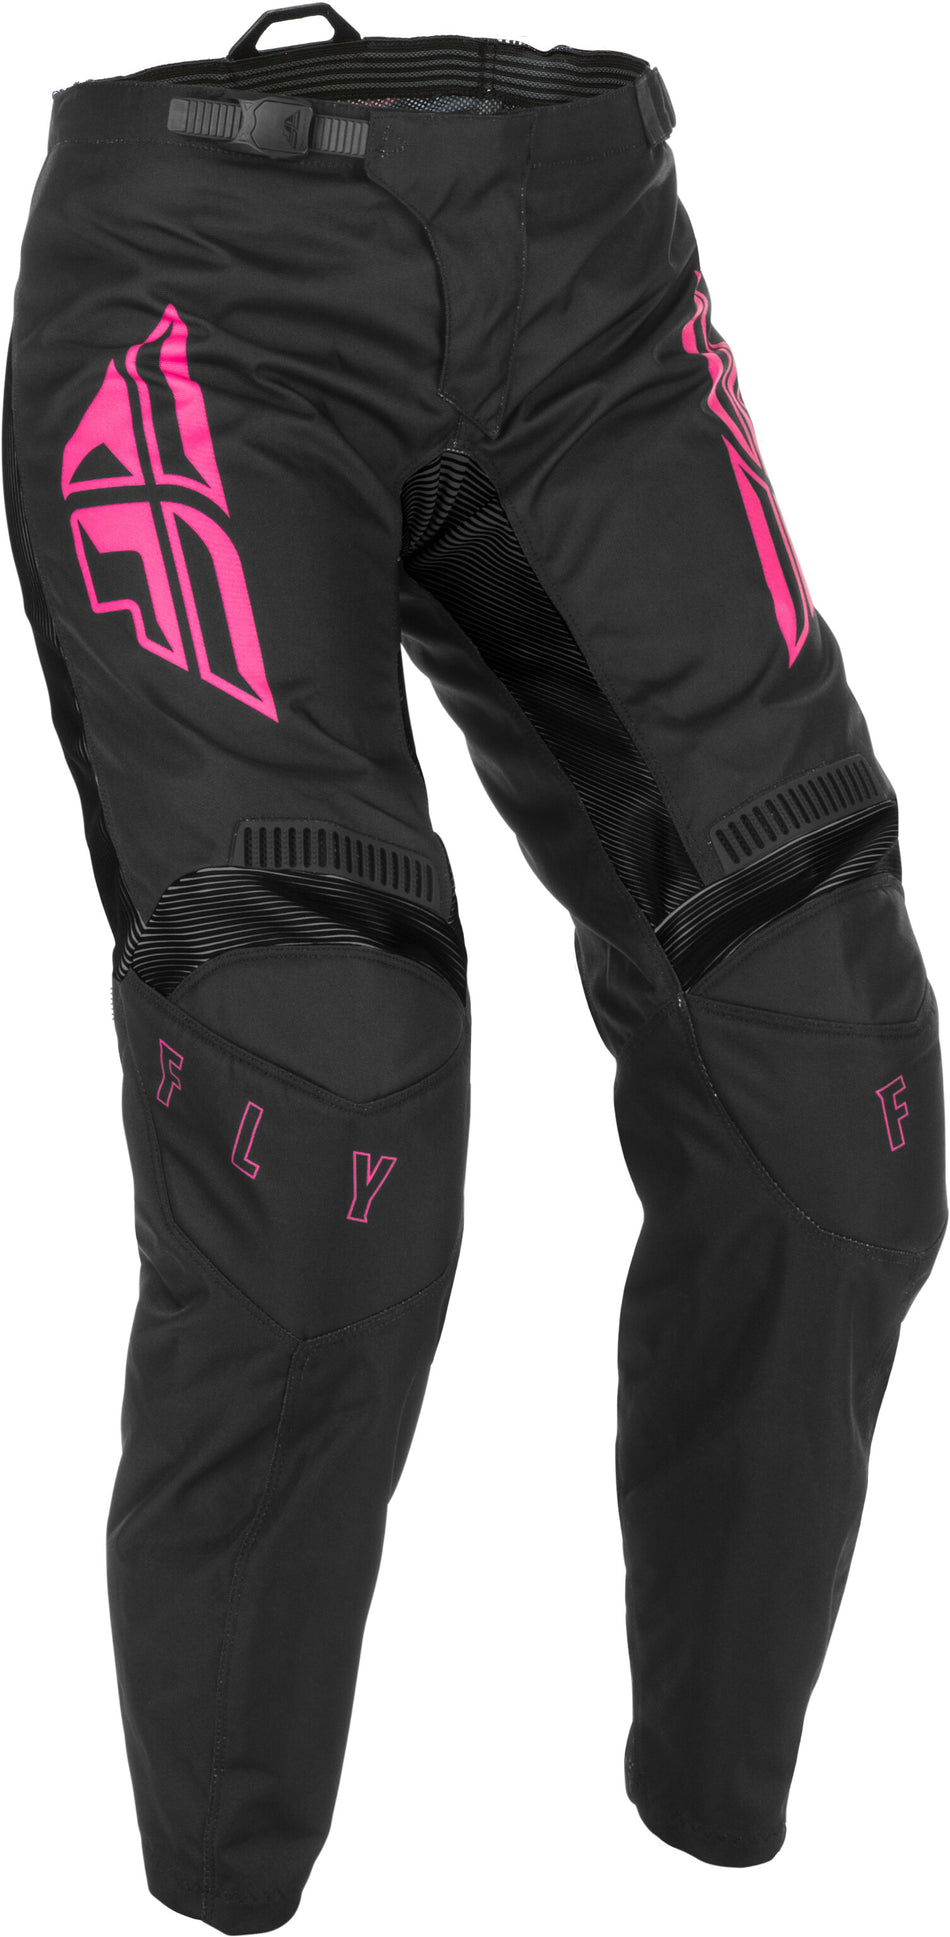 FLY RACING Women's F-16 Pants Black/Pink Sz 09/10 374-83008